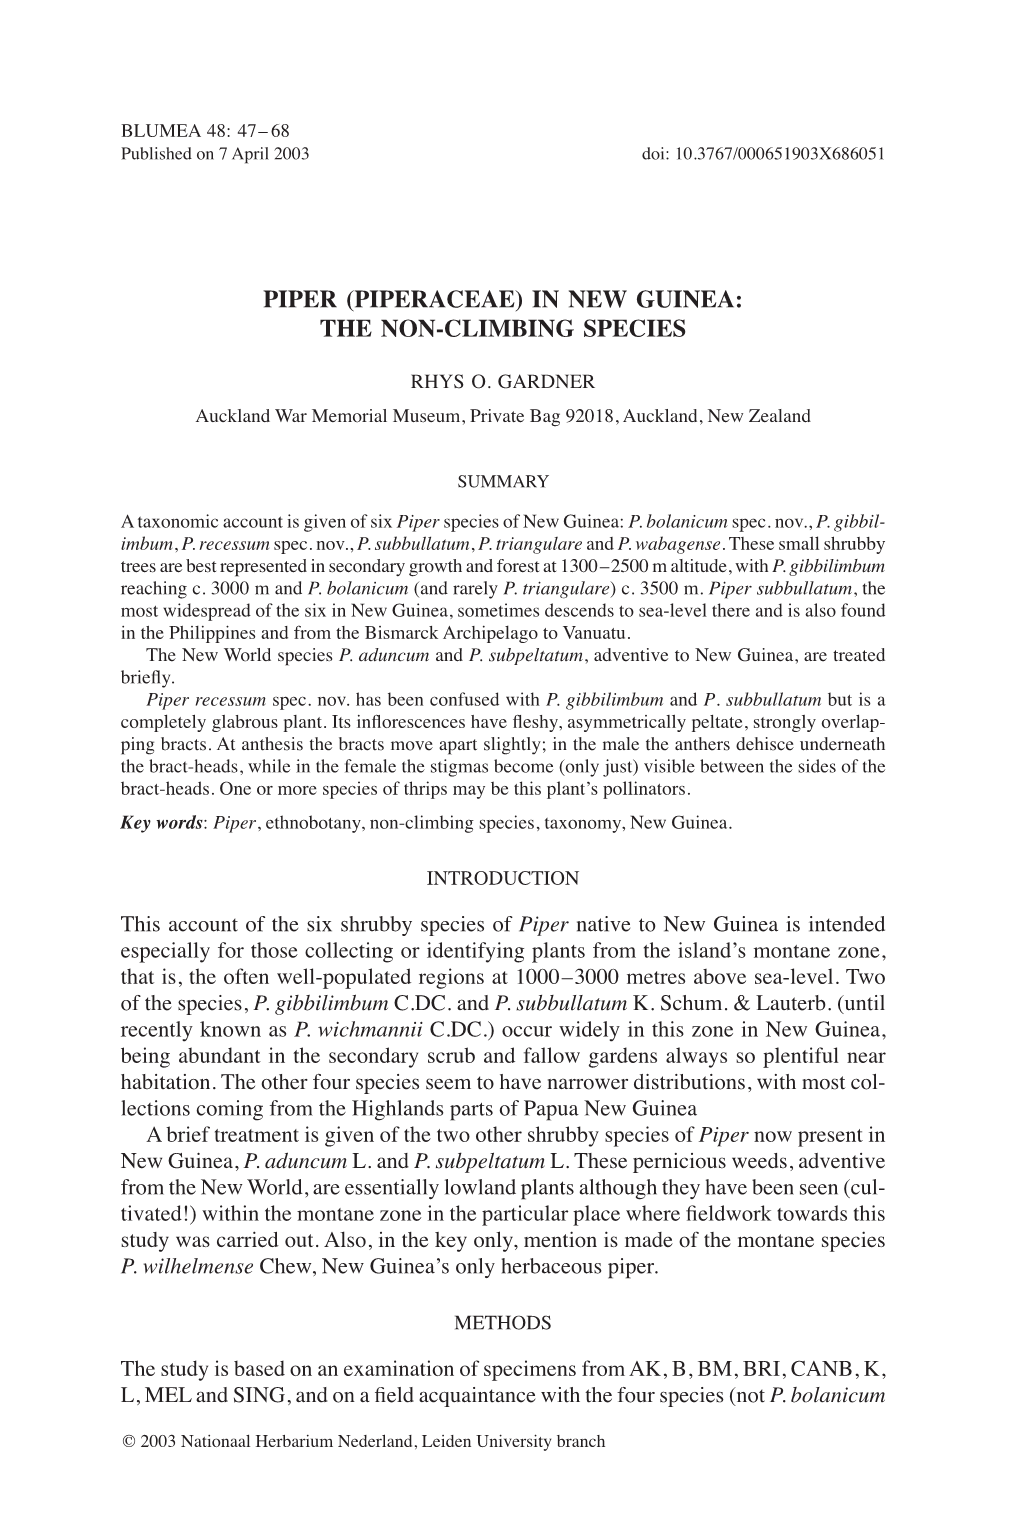 Piper (Piperaceae) in New Guinea: the Non-Climbing Species